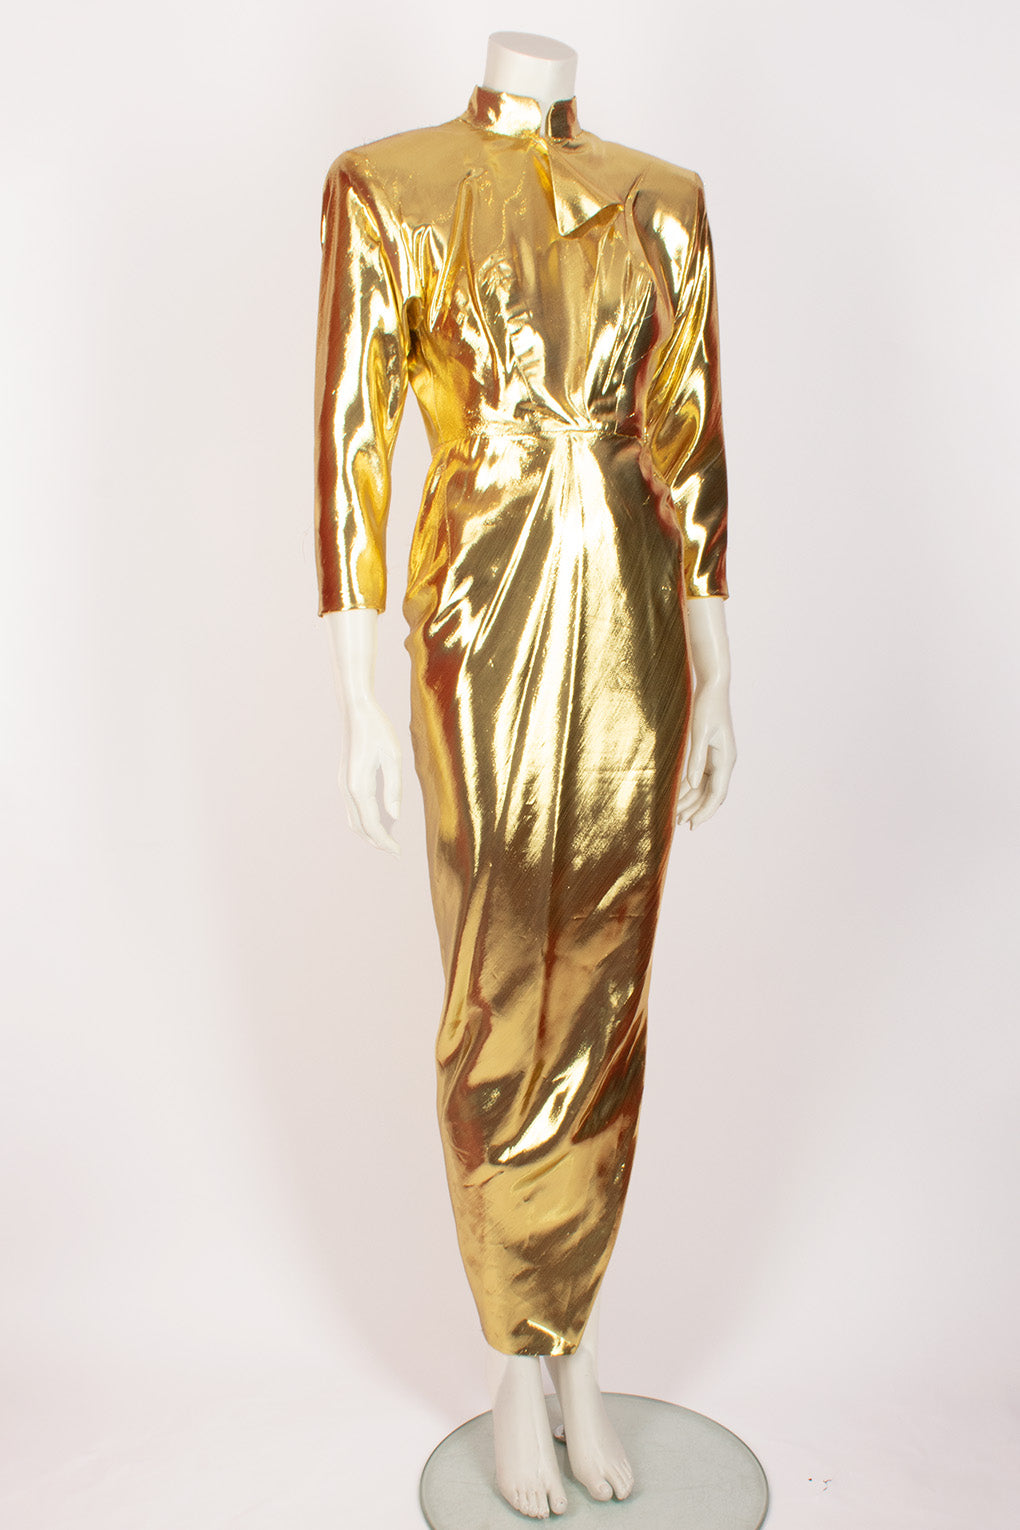 ANTONY PRICE Gold Lamé Dress